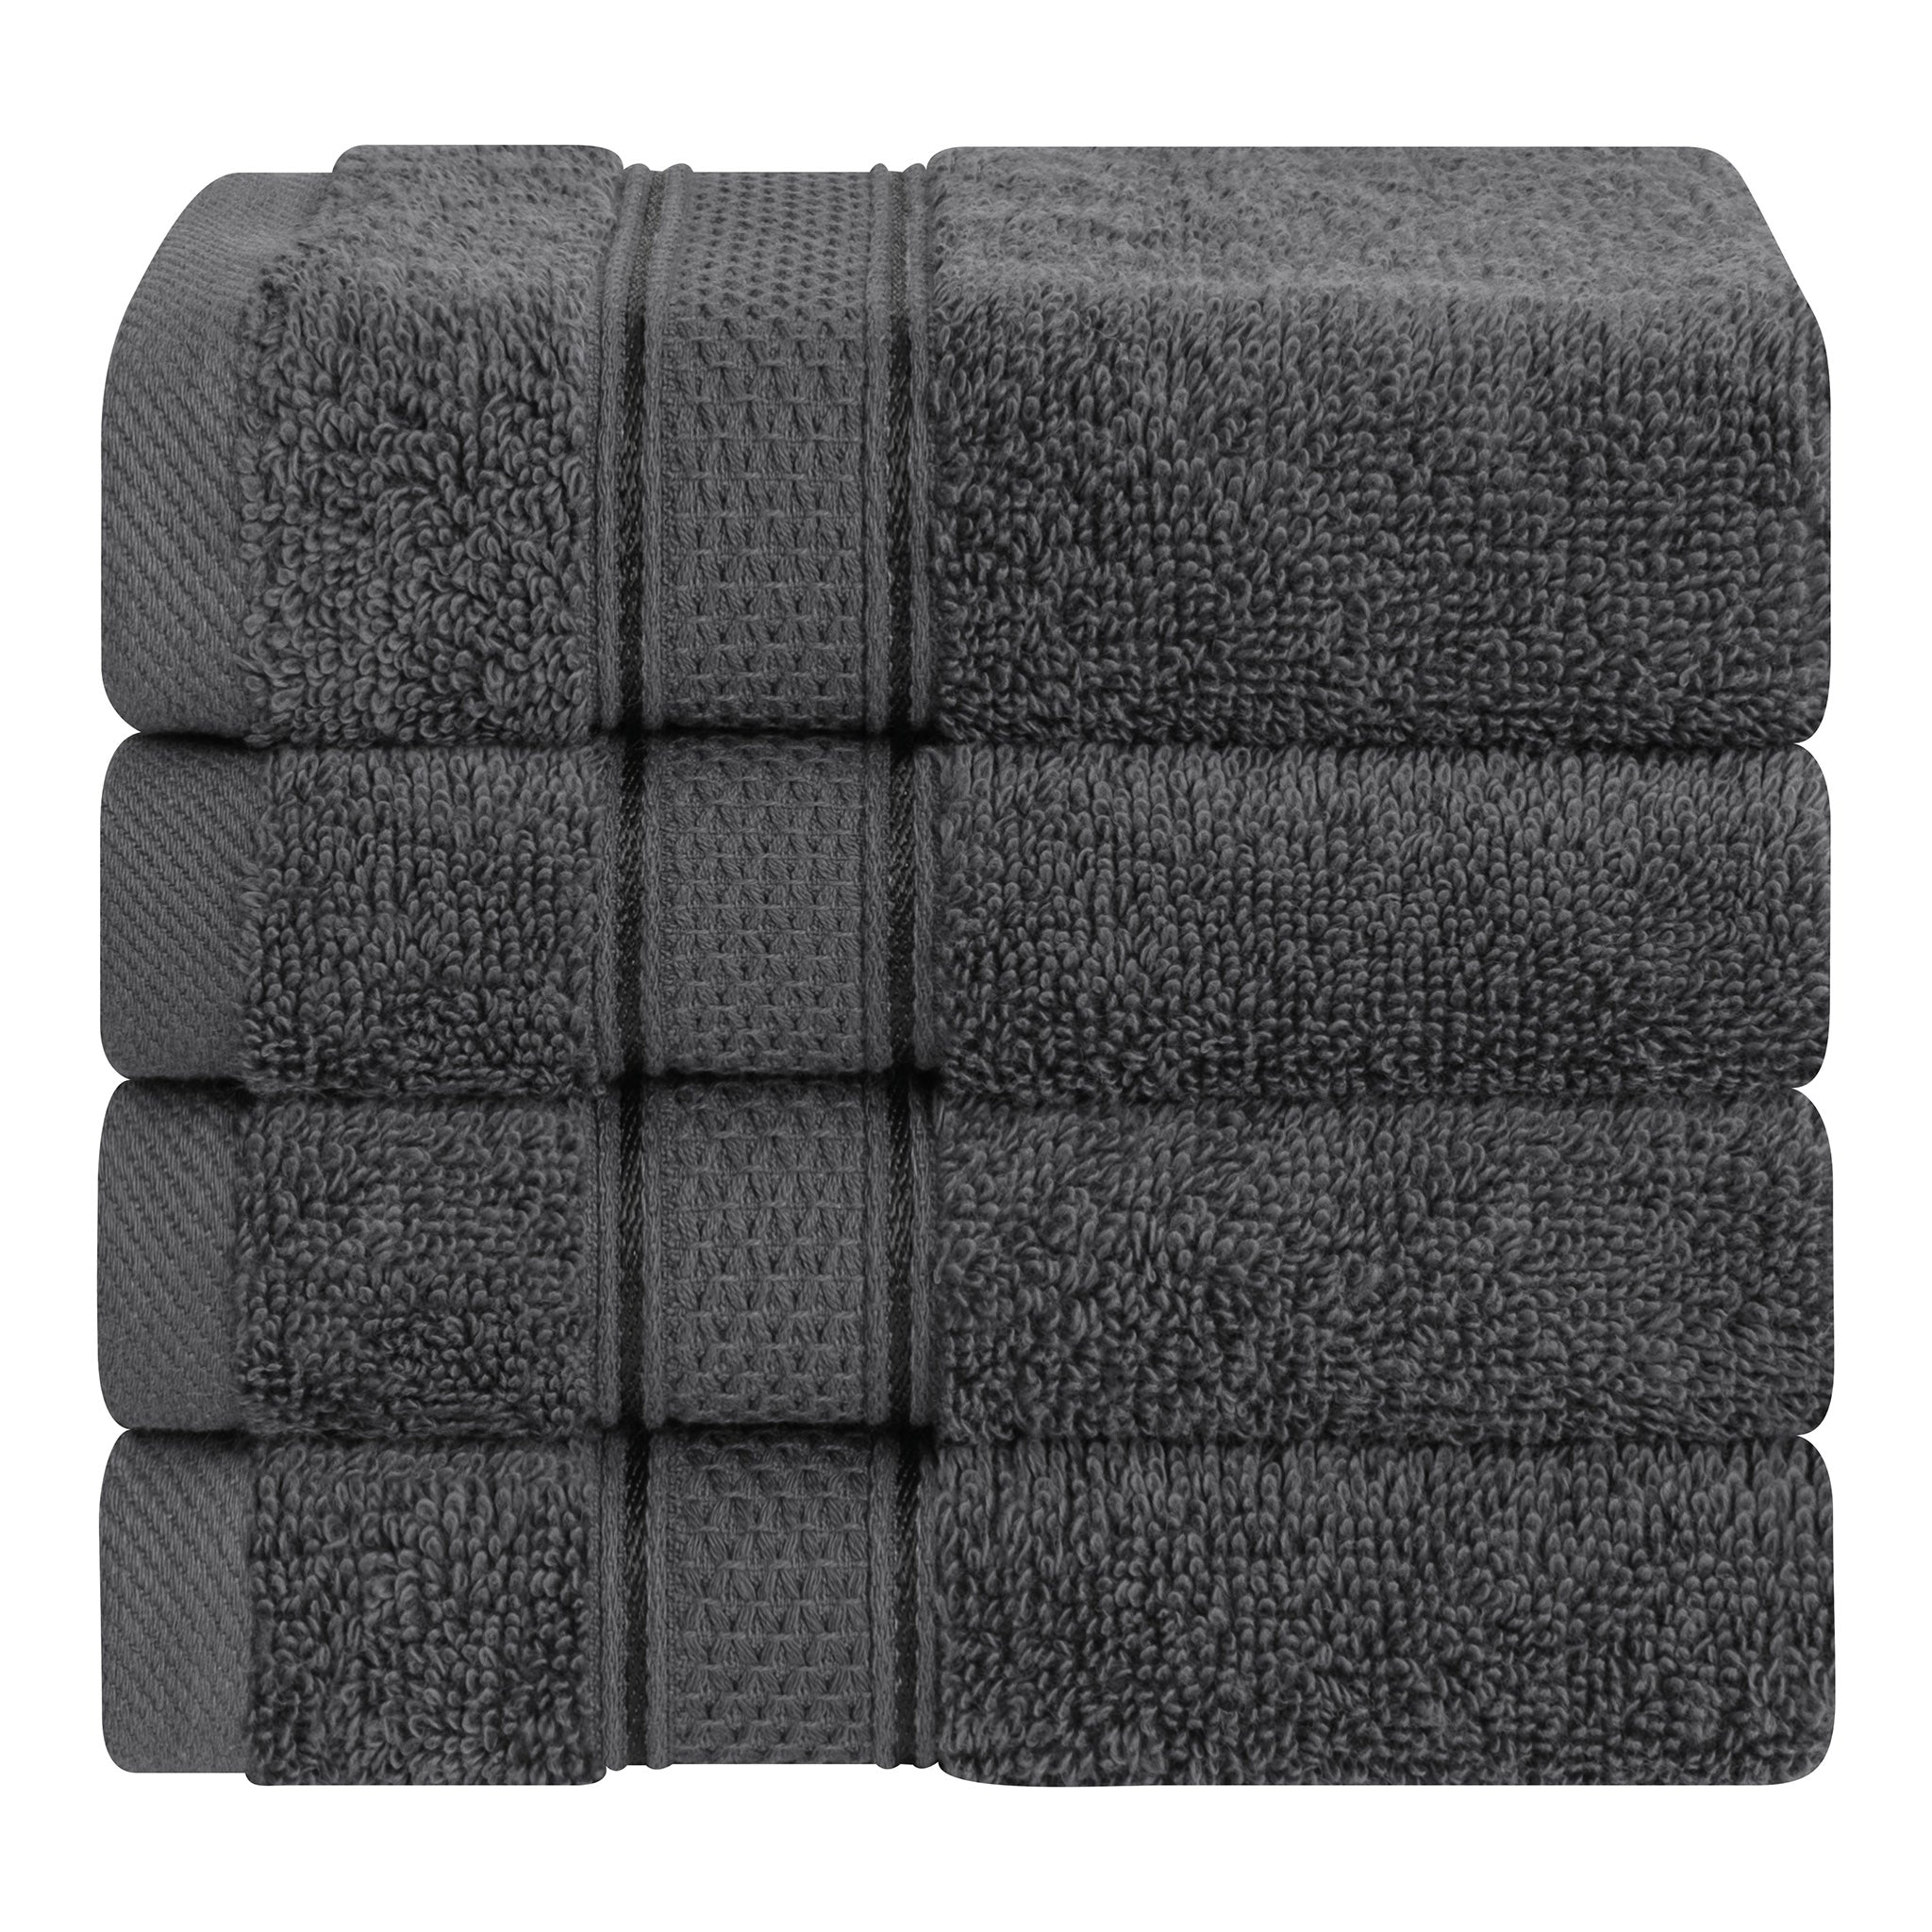 American Soft Linen, 100% Turkish Combed Cotton Luxury, Salem 4 Piece Washcloth Set - 60 Set Case Pack -gray-1